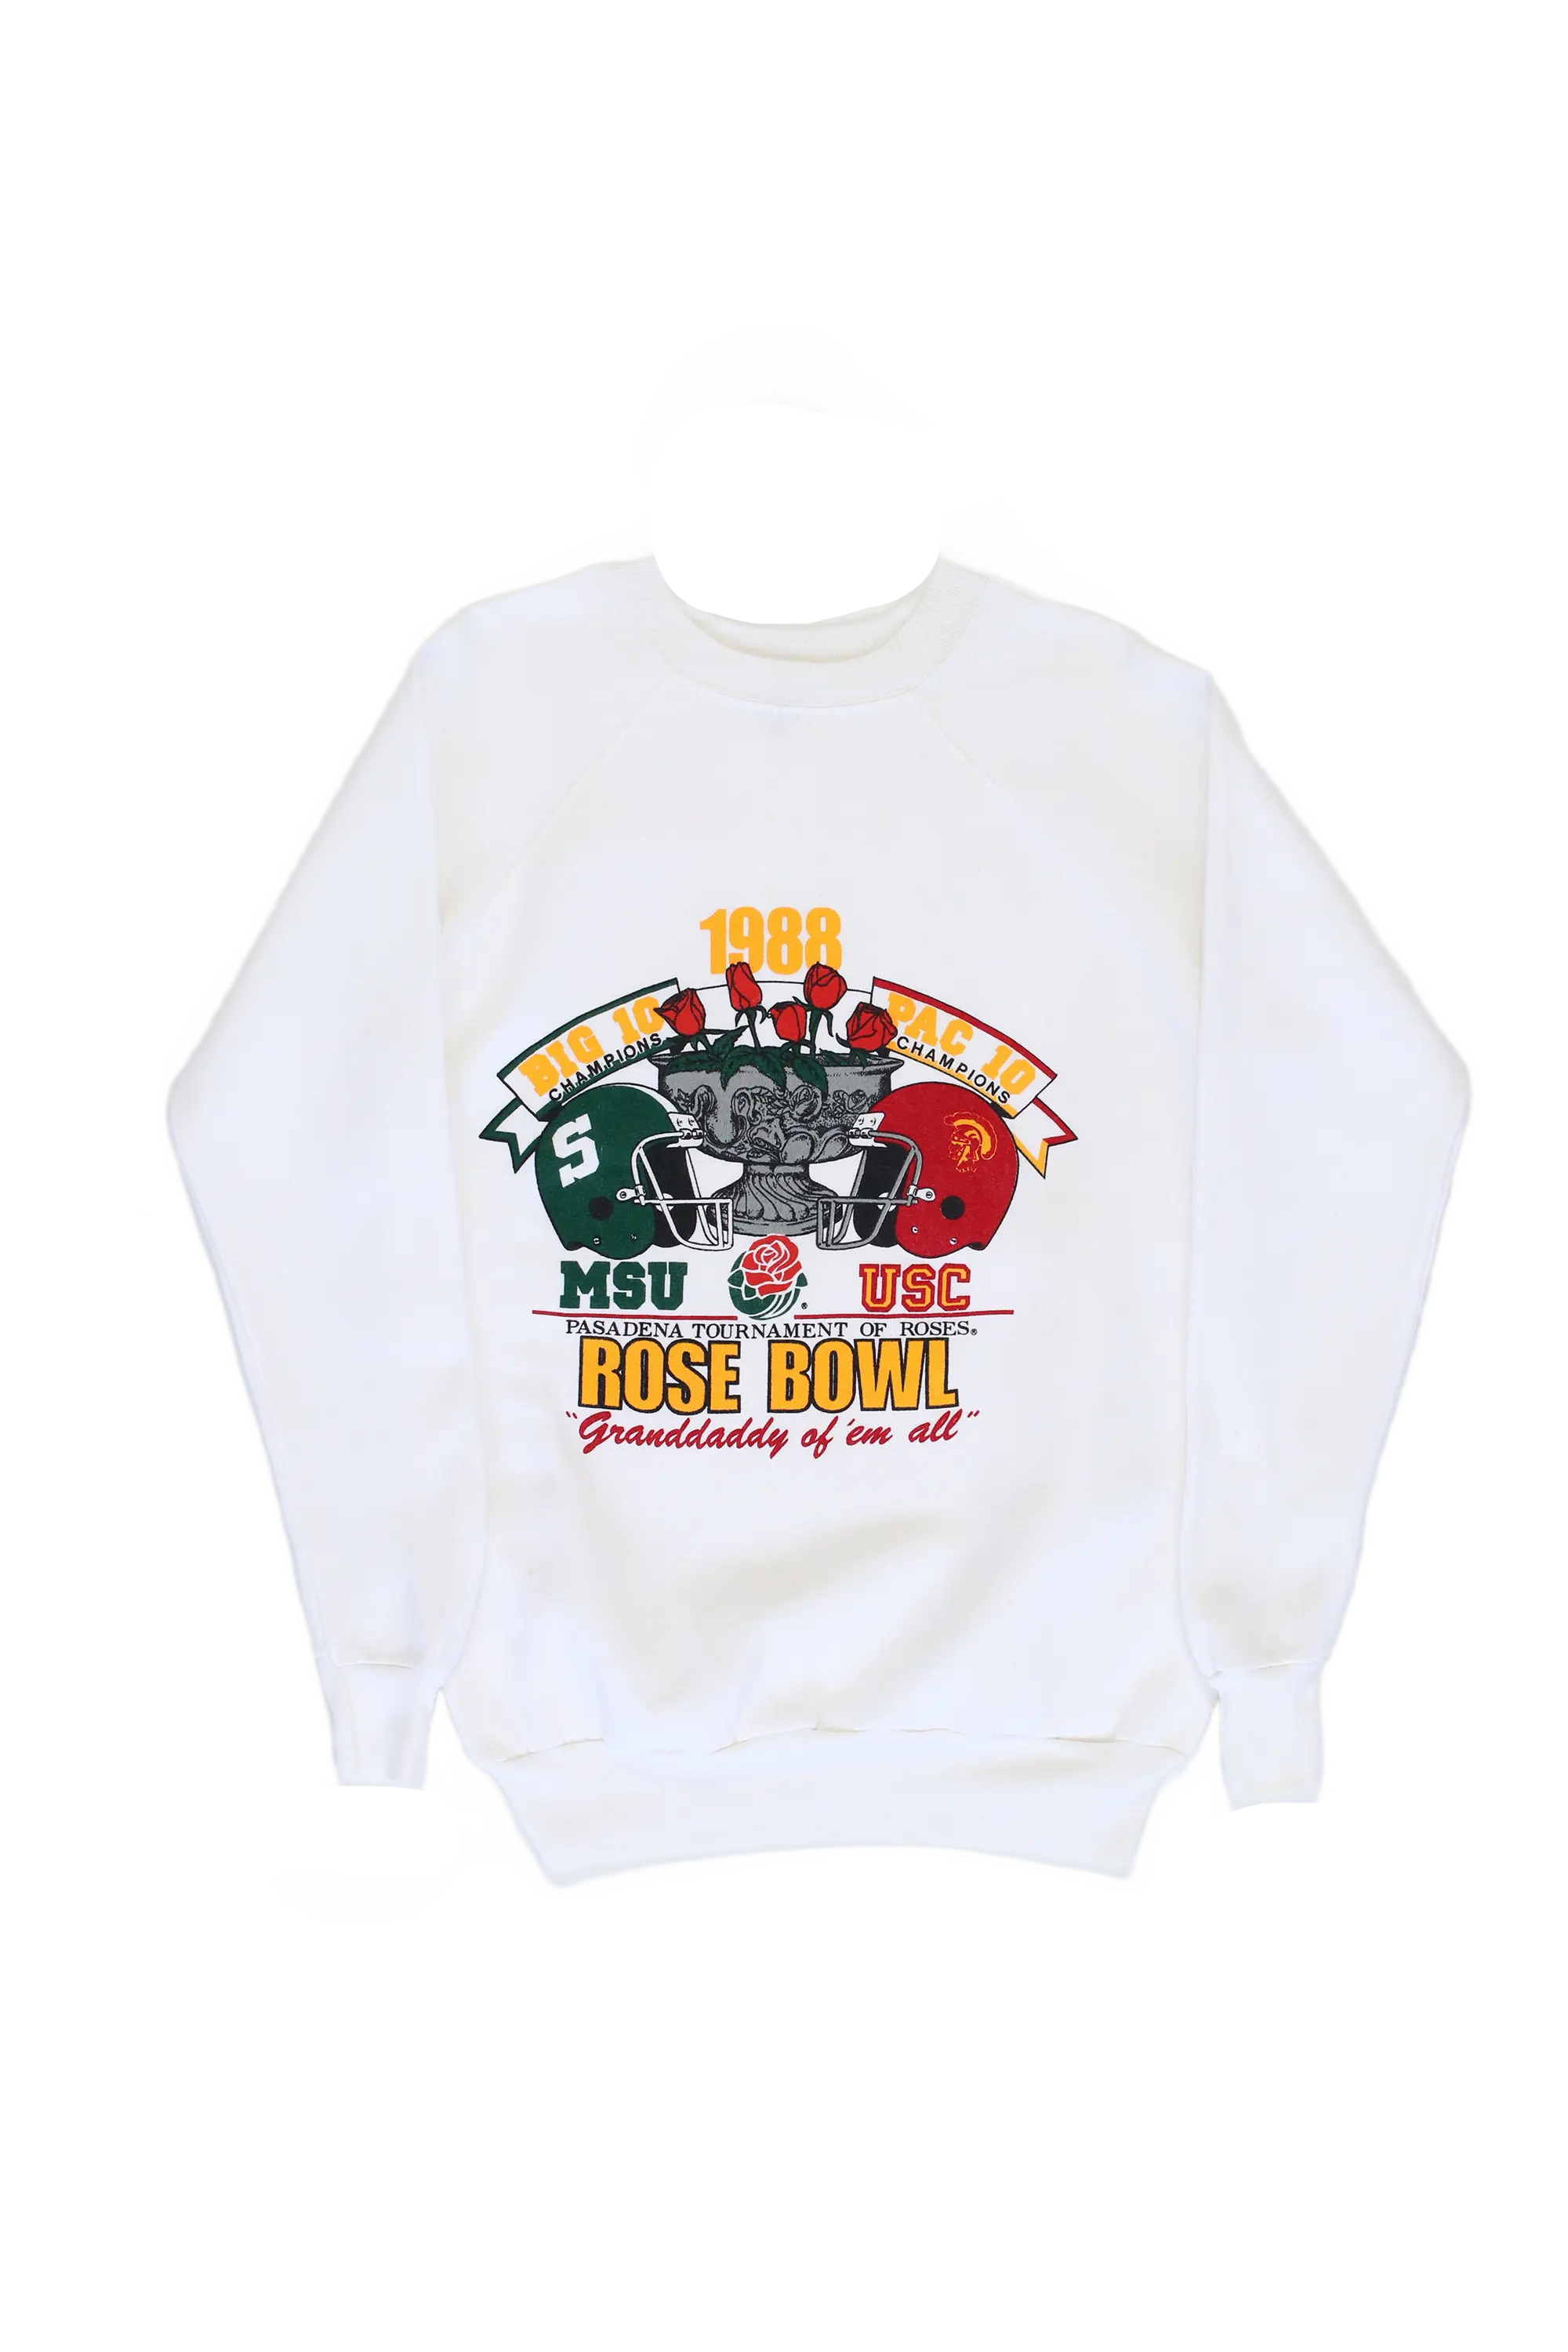 Rose Bowl 1988 Football Sweater